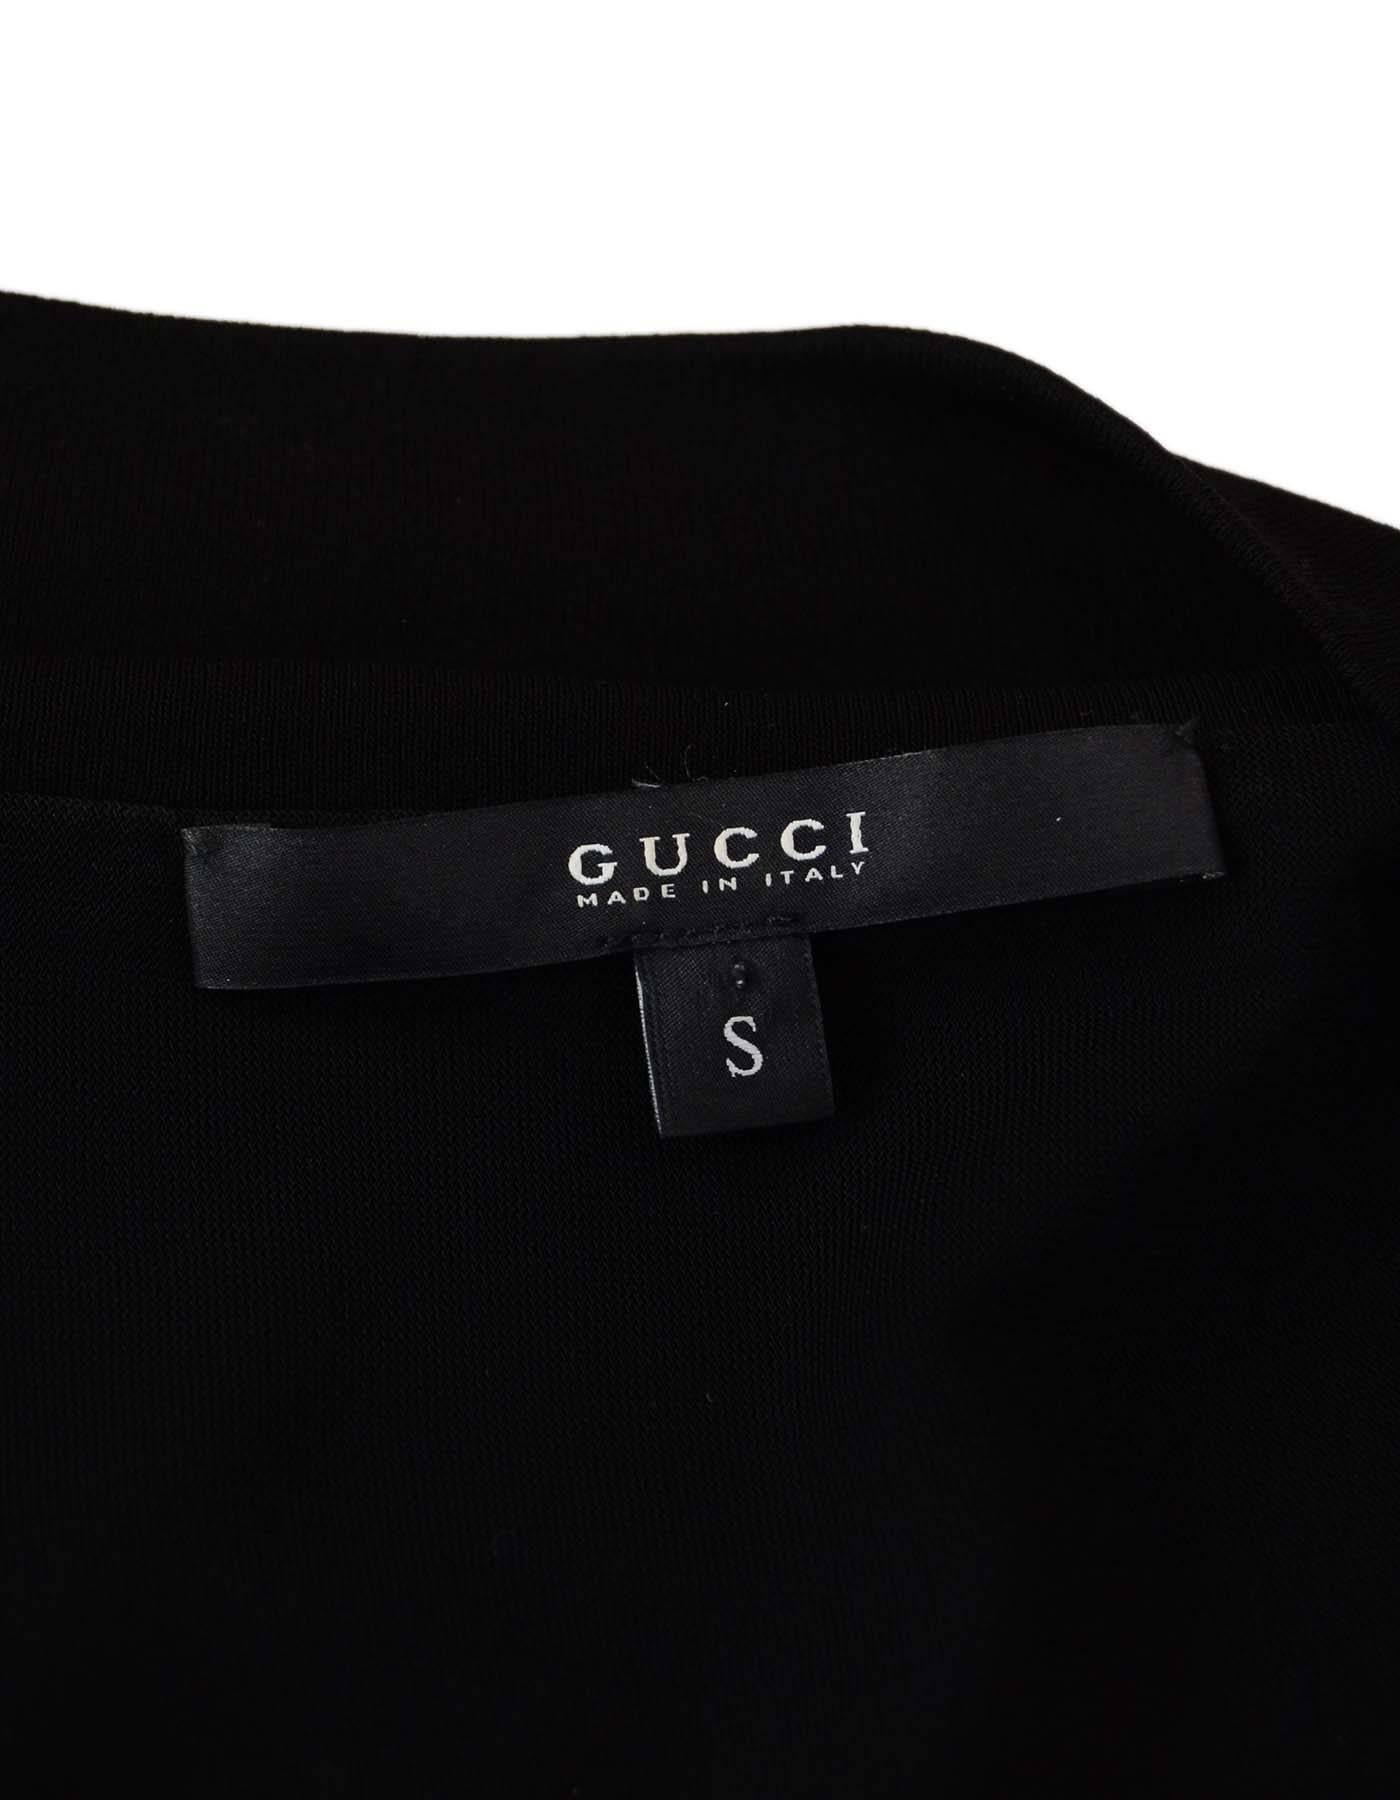 Women's Gucci Black Dress with Belt Sz S